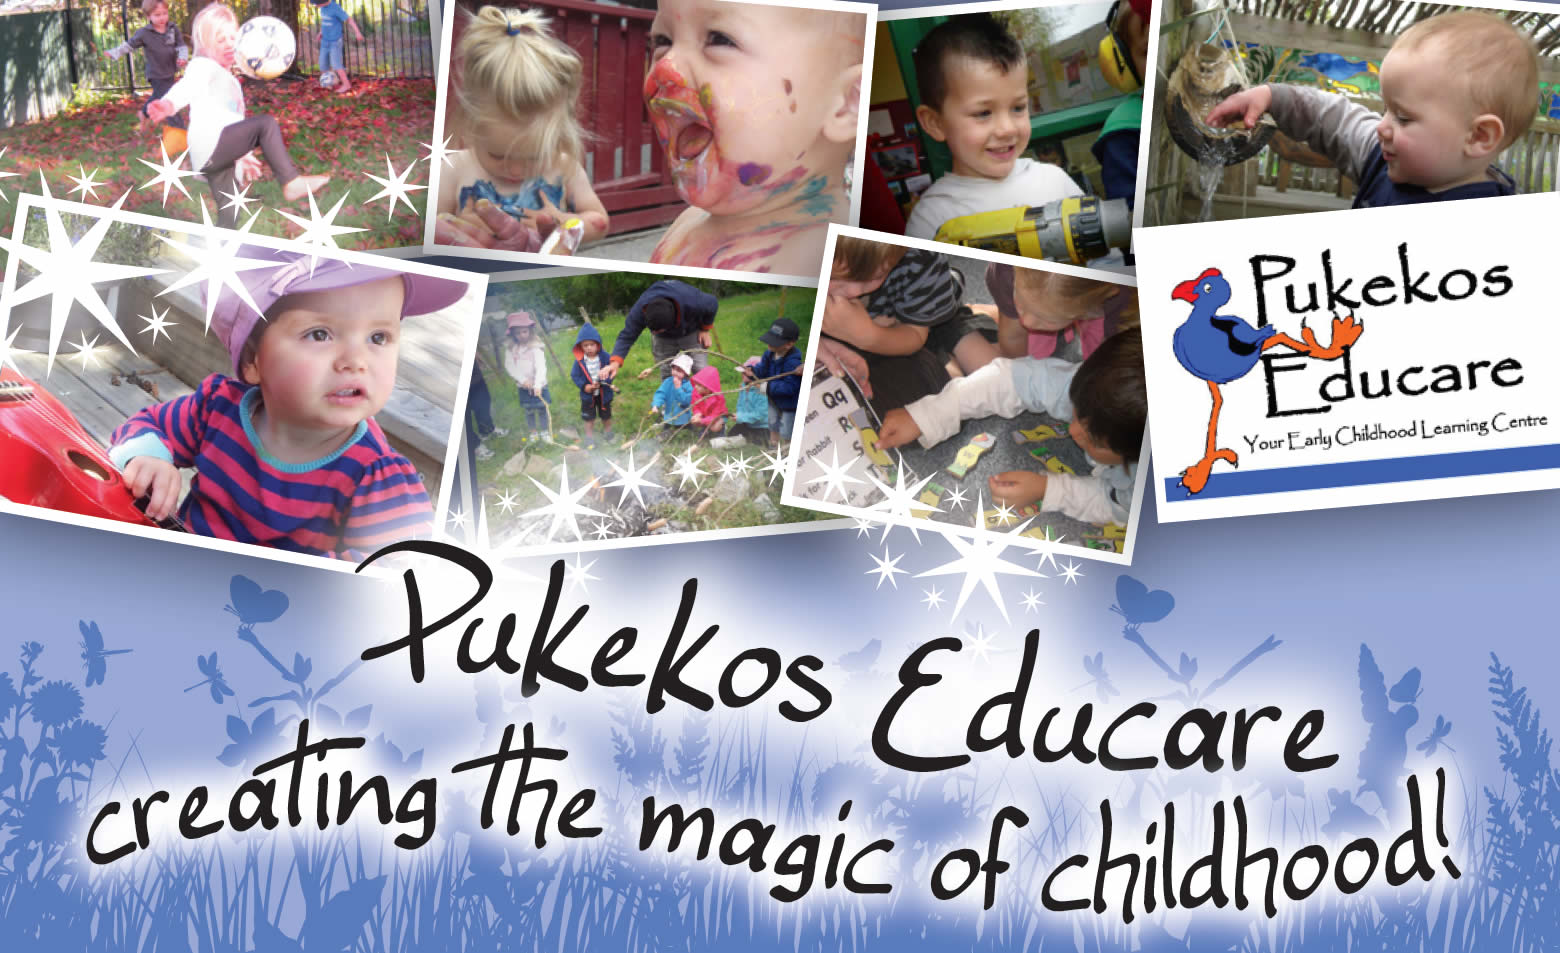 Pukekos Educare Banner Image